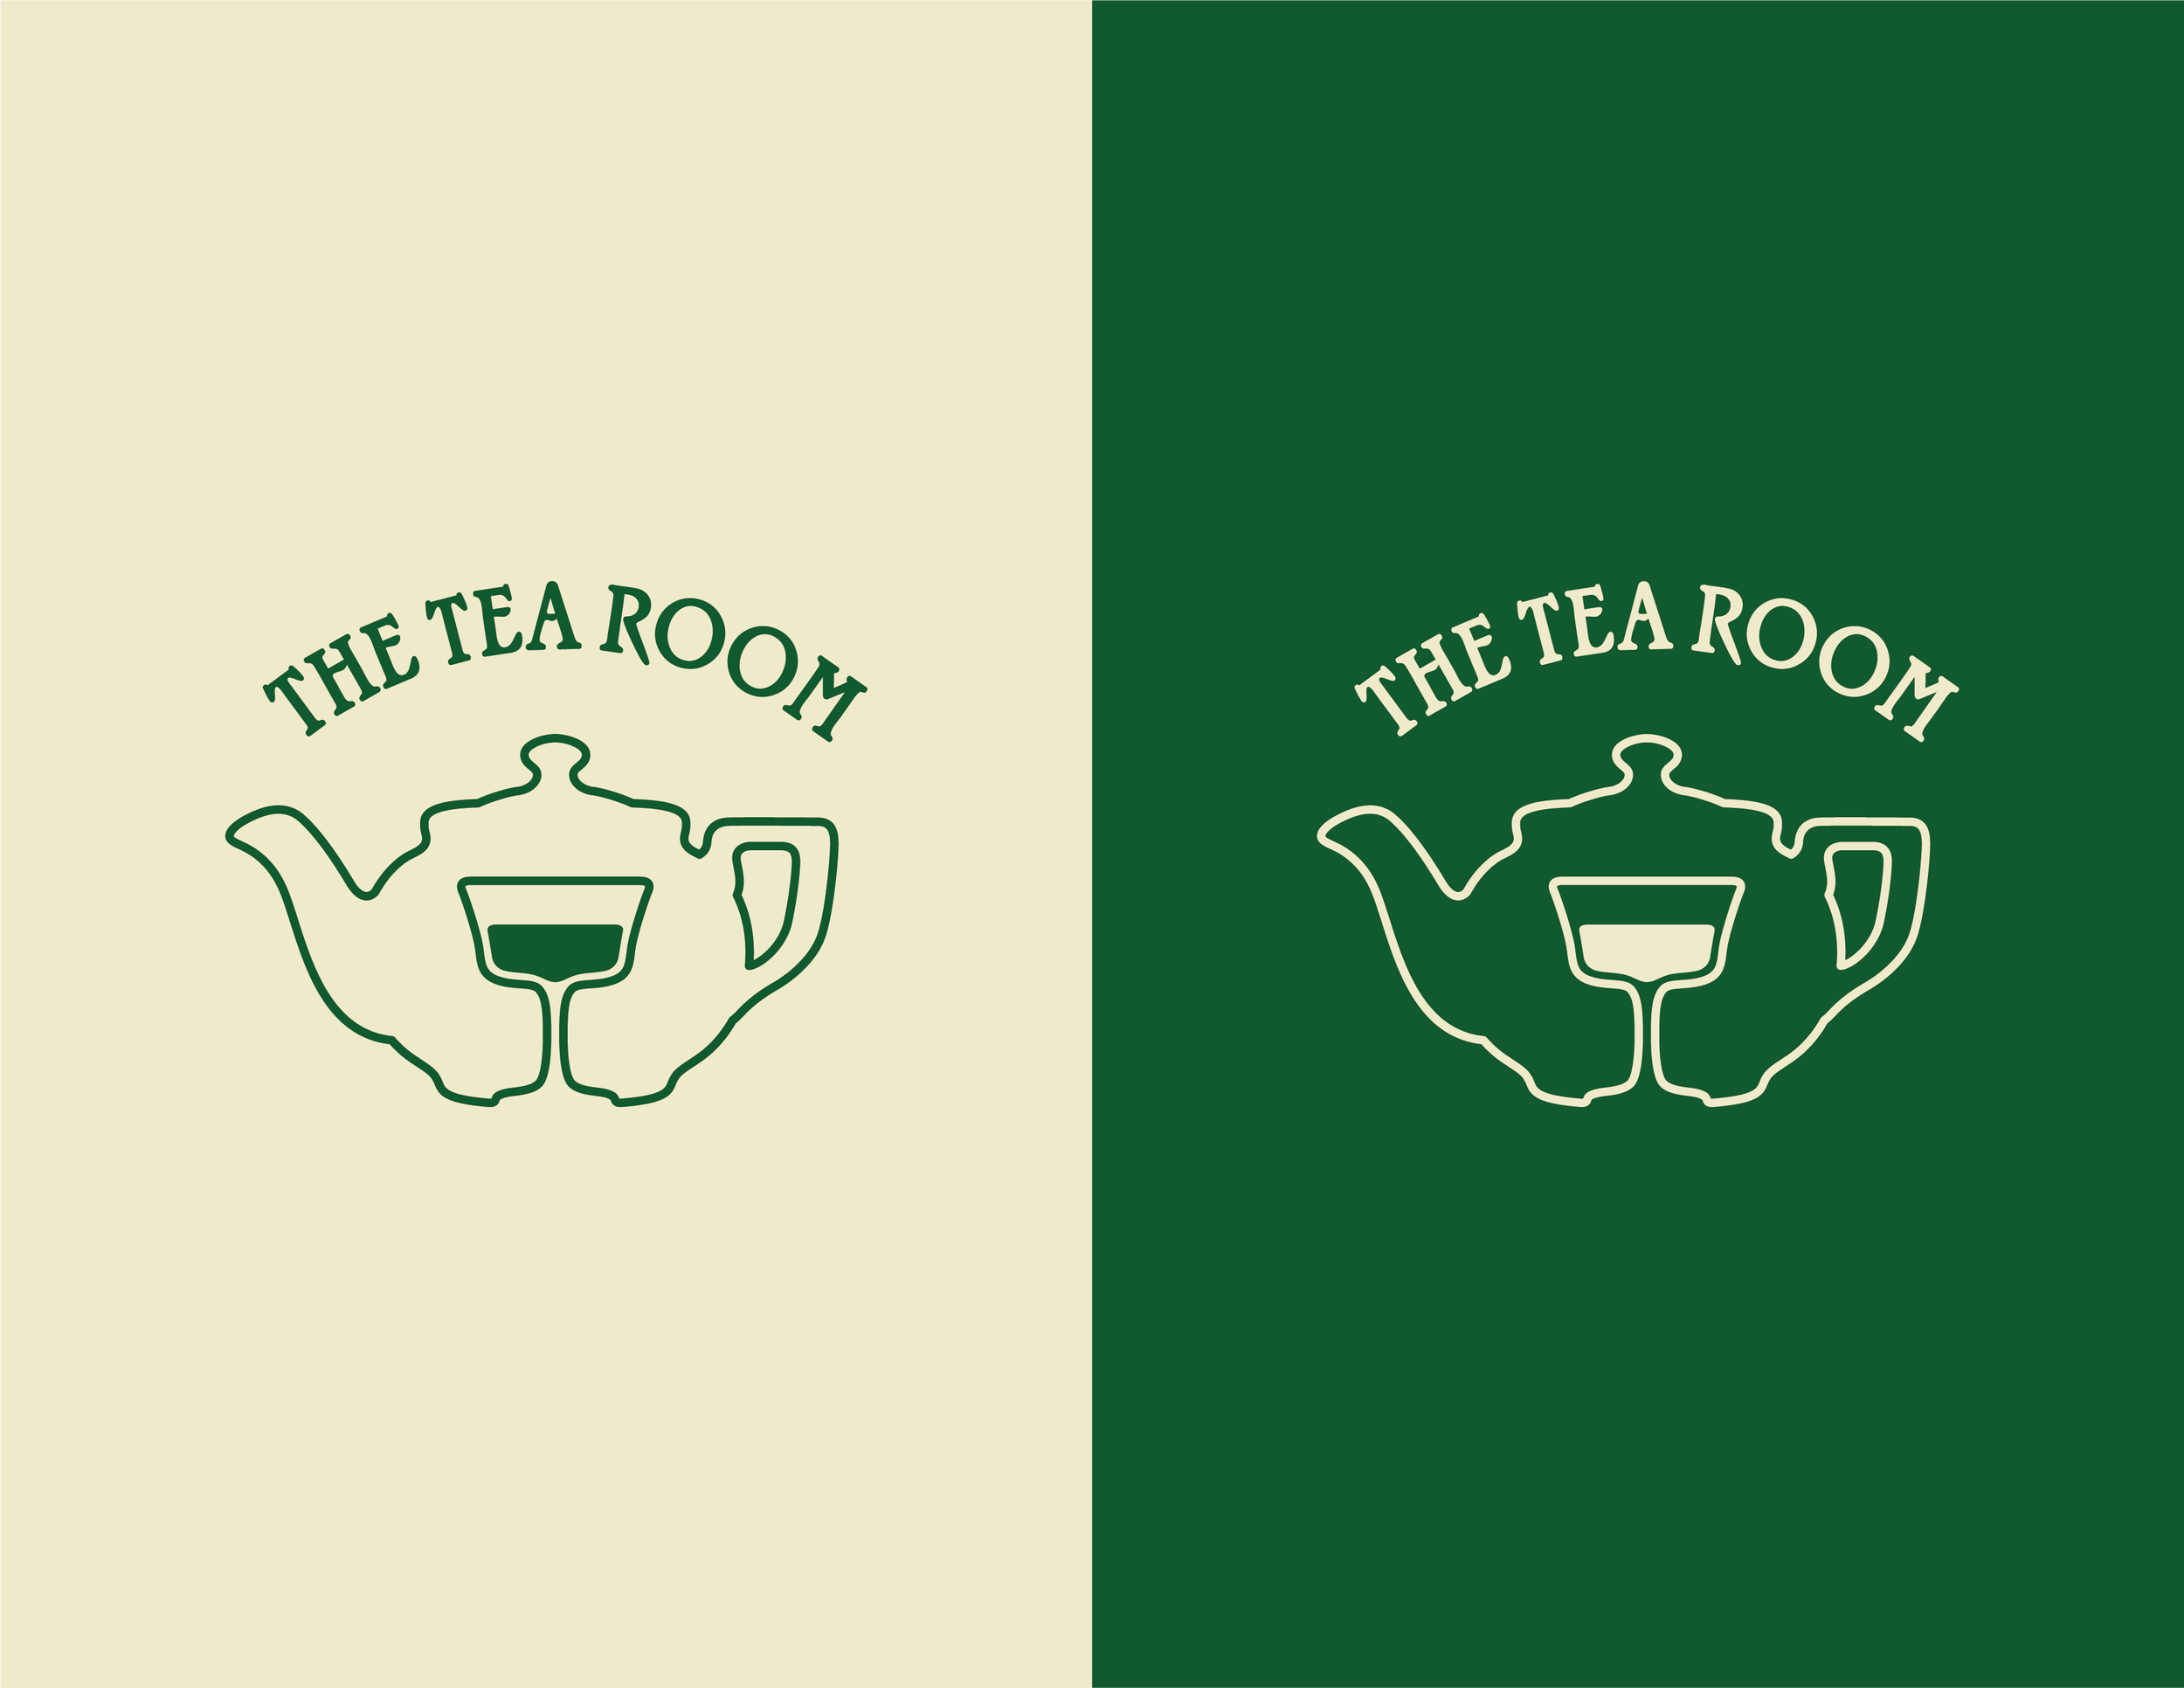 Tea Room Logos.png